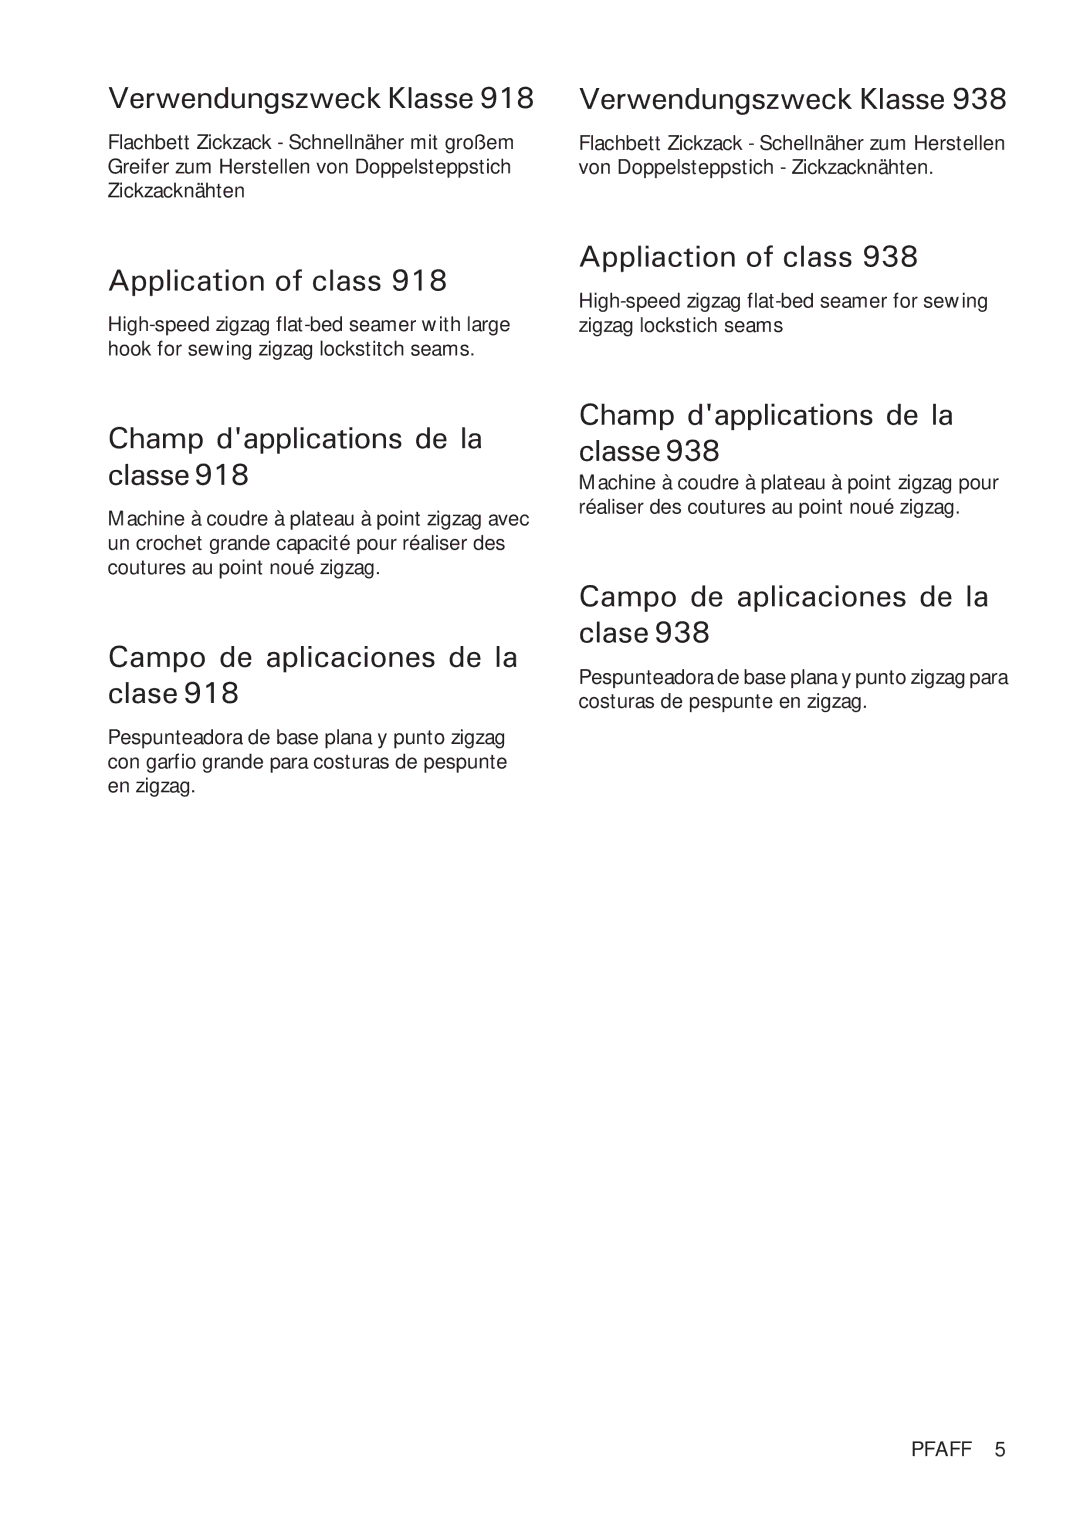 Pfaff Verwendungszweck Klasse, Application of class, Appliaction of class, Champ dapplications de la classe918 